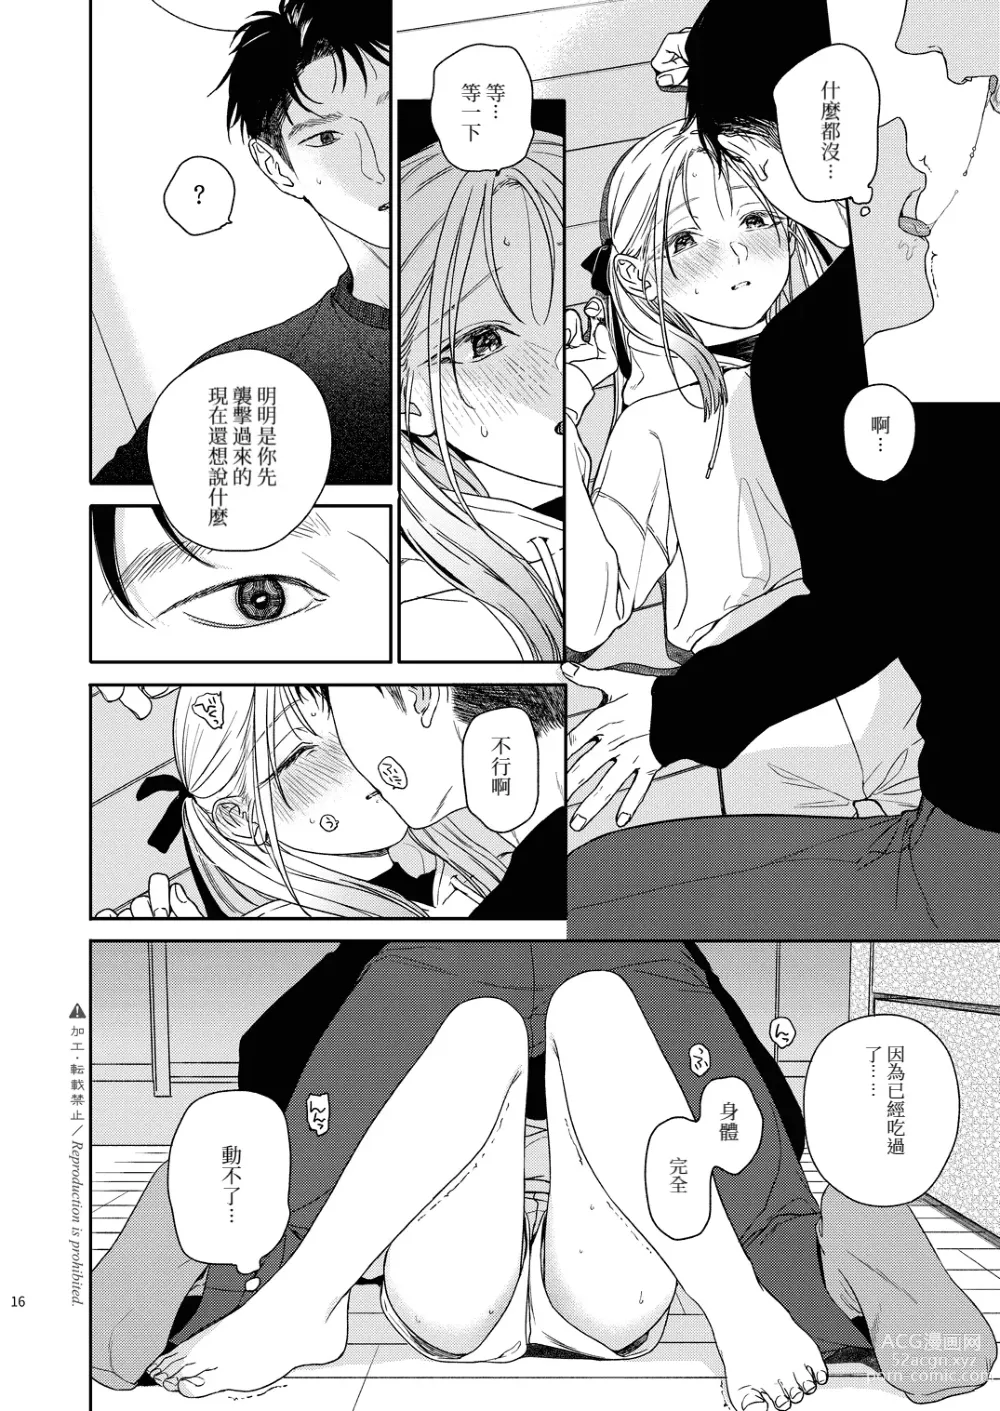 Page 18 of doujinshi Katami to Getsumei